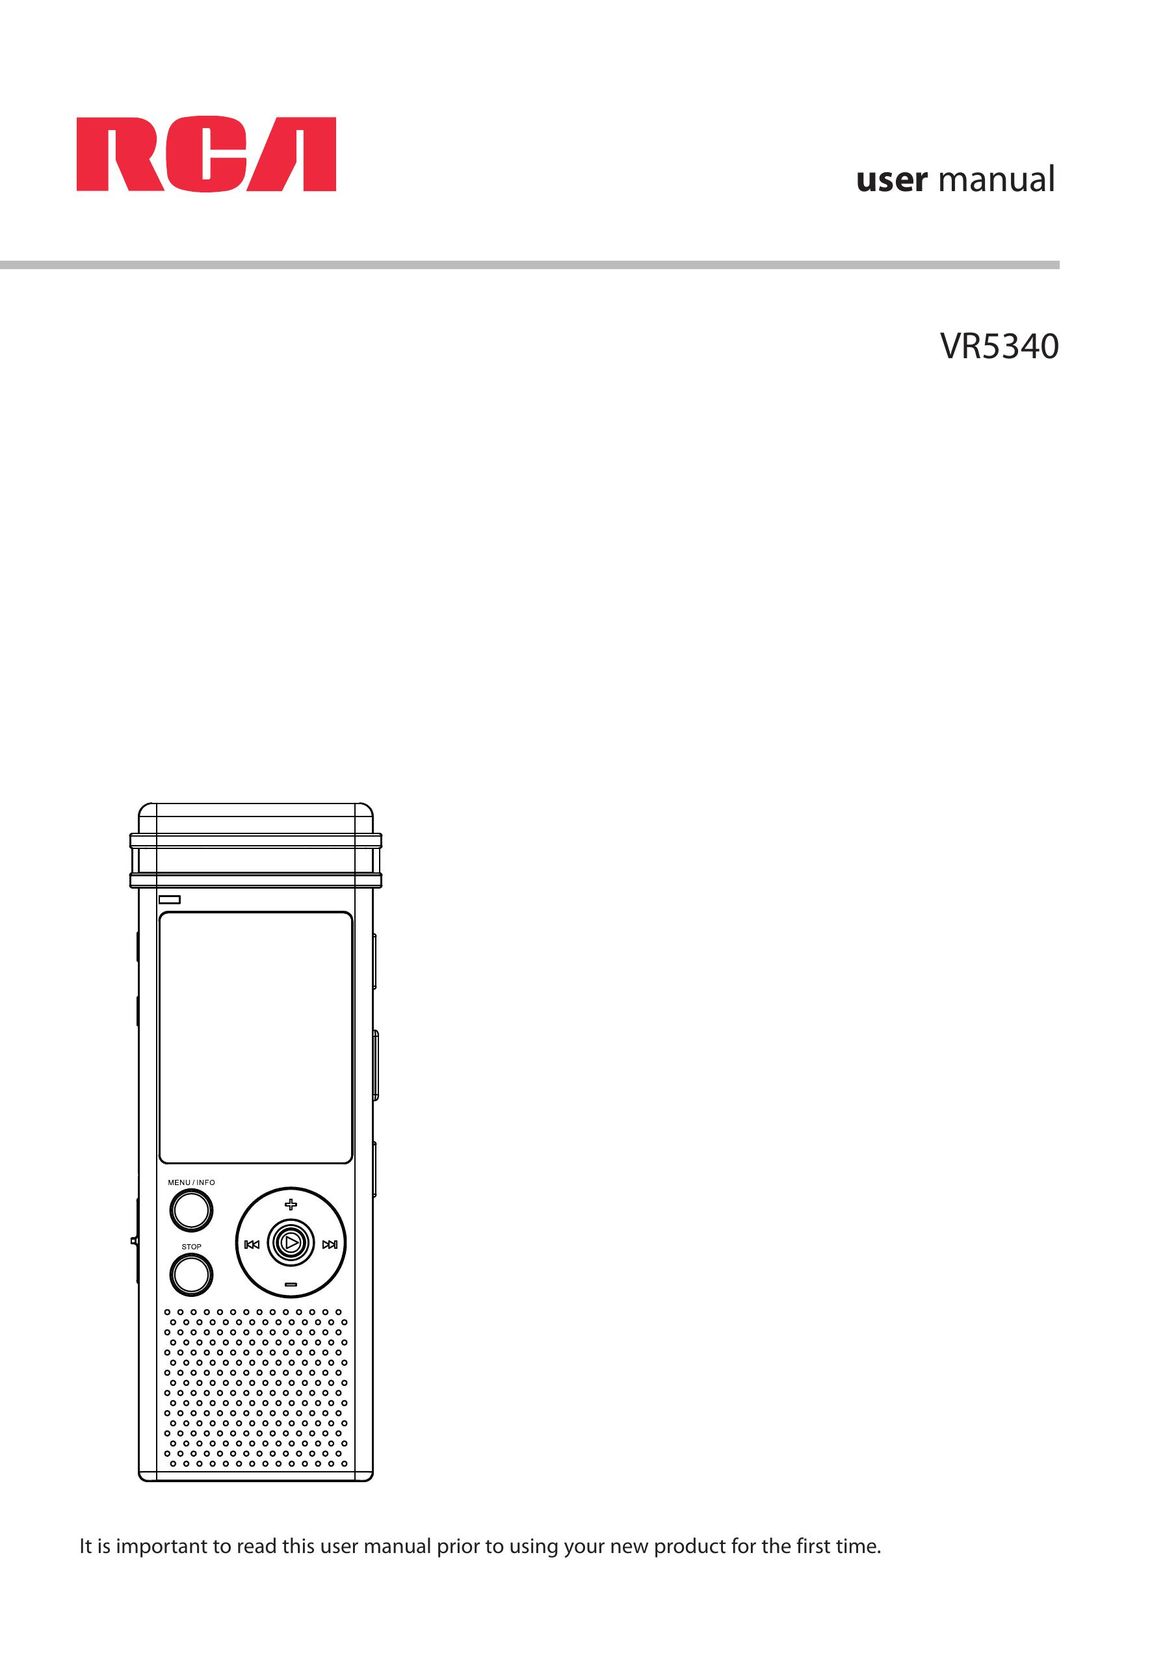 RCA VR5340 Microcassette Recorder User Manual